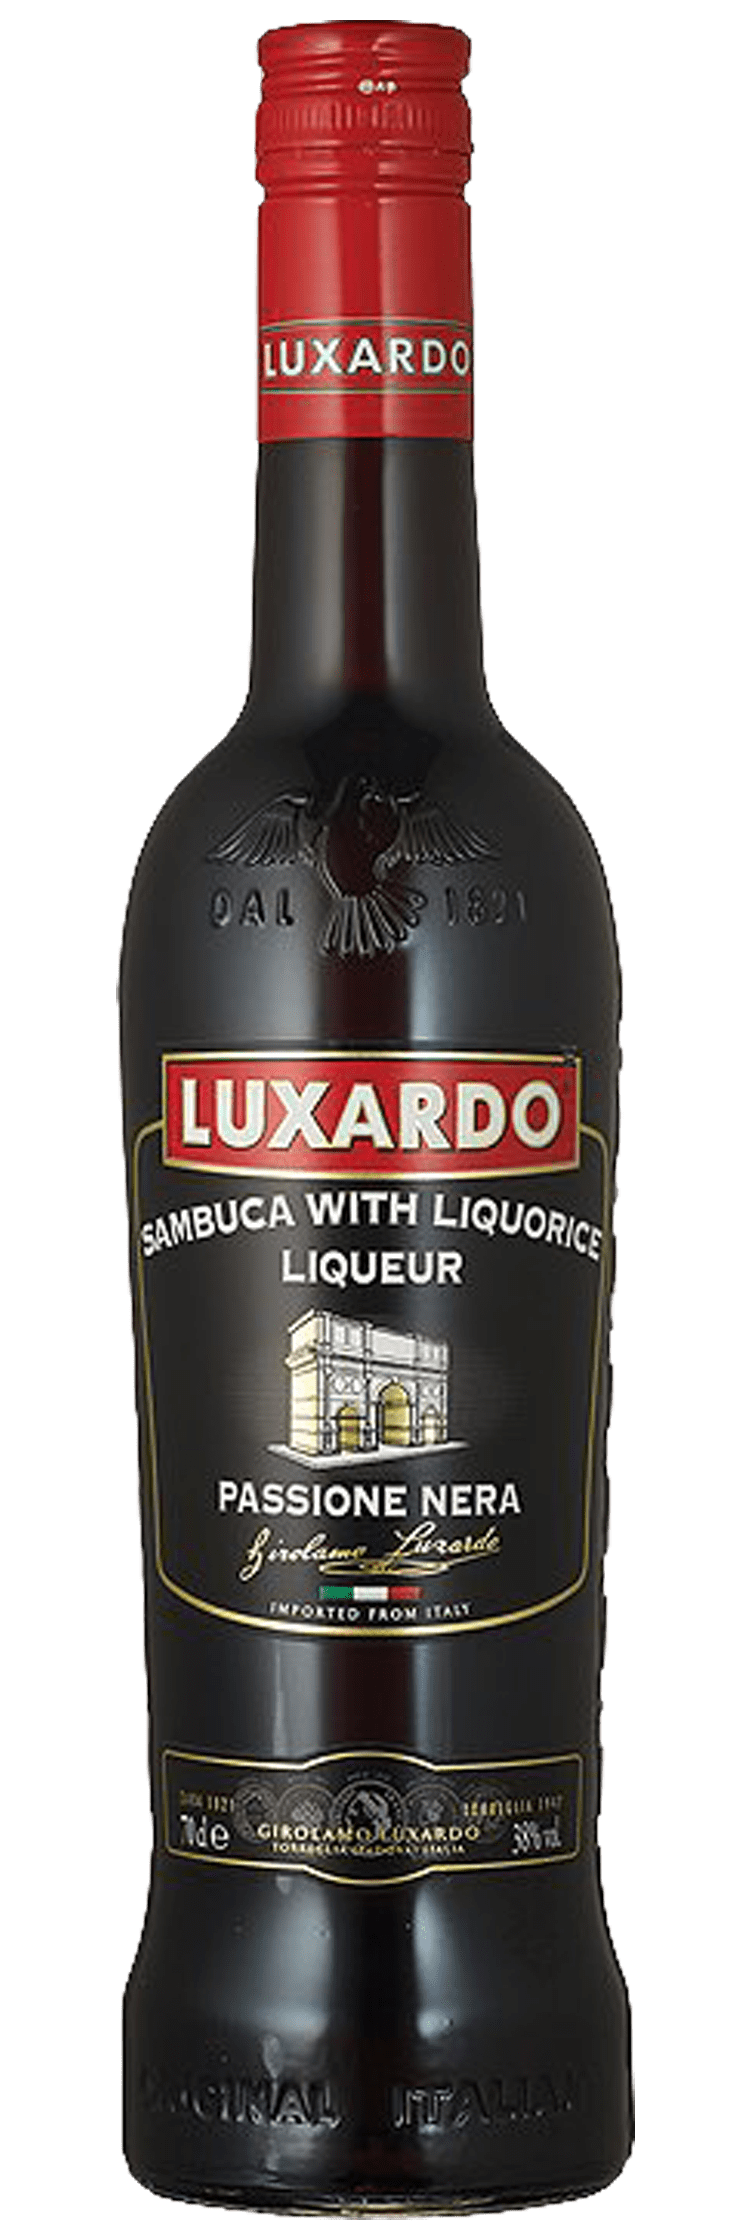 Luxardo Sambuca with Liquorice Liqueur Pasionne Nera 700ml.